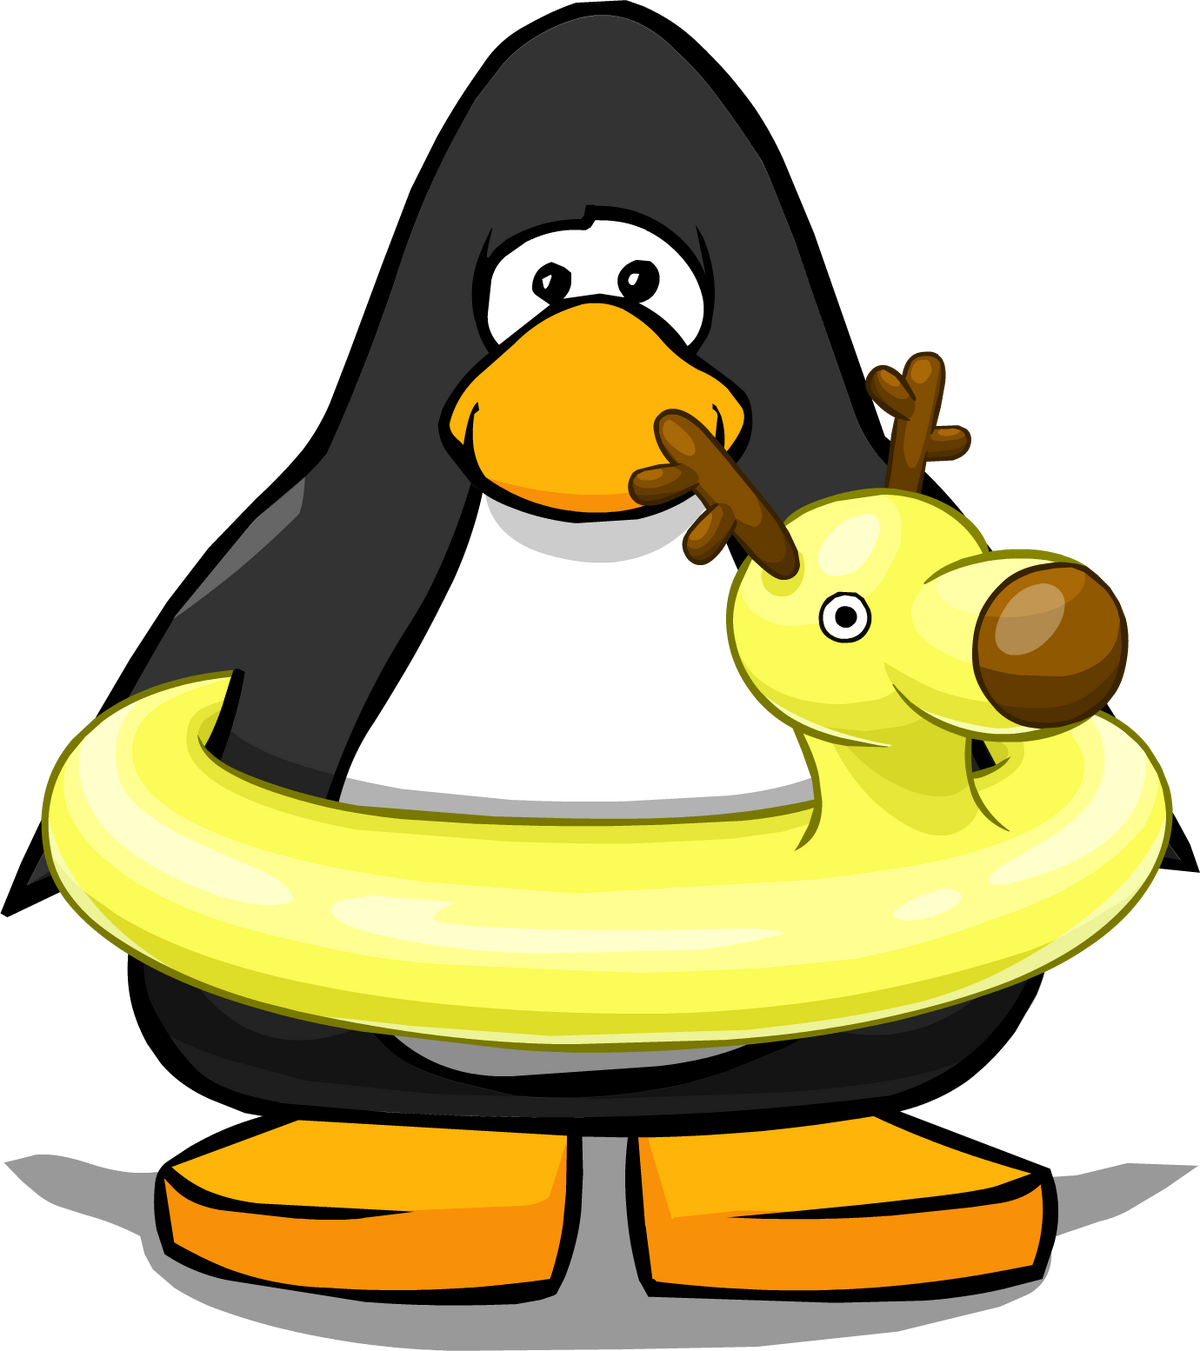 Stream Club Penguin - The Penguin Dance by Lucasdu6